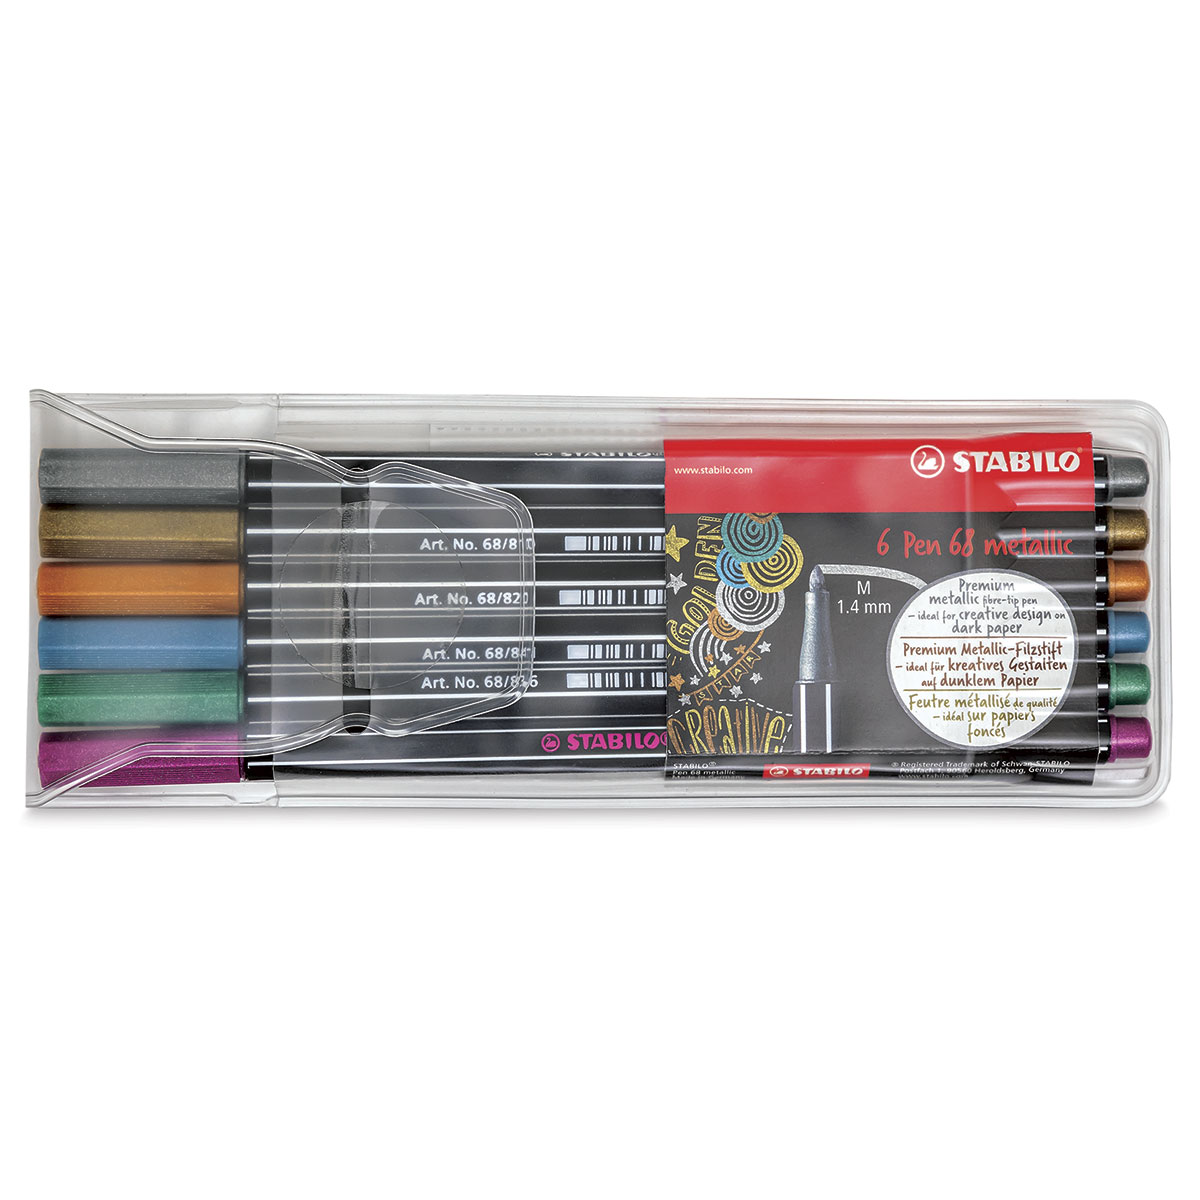 Koel glans mesh Stabilo Pen 68 Metallic Pens and Sets | BLICK Art Materials